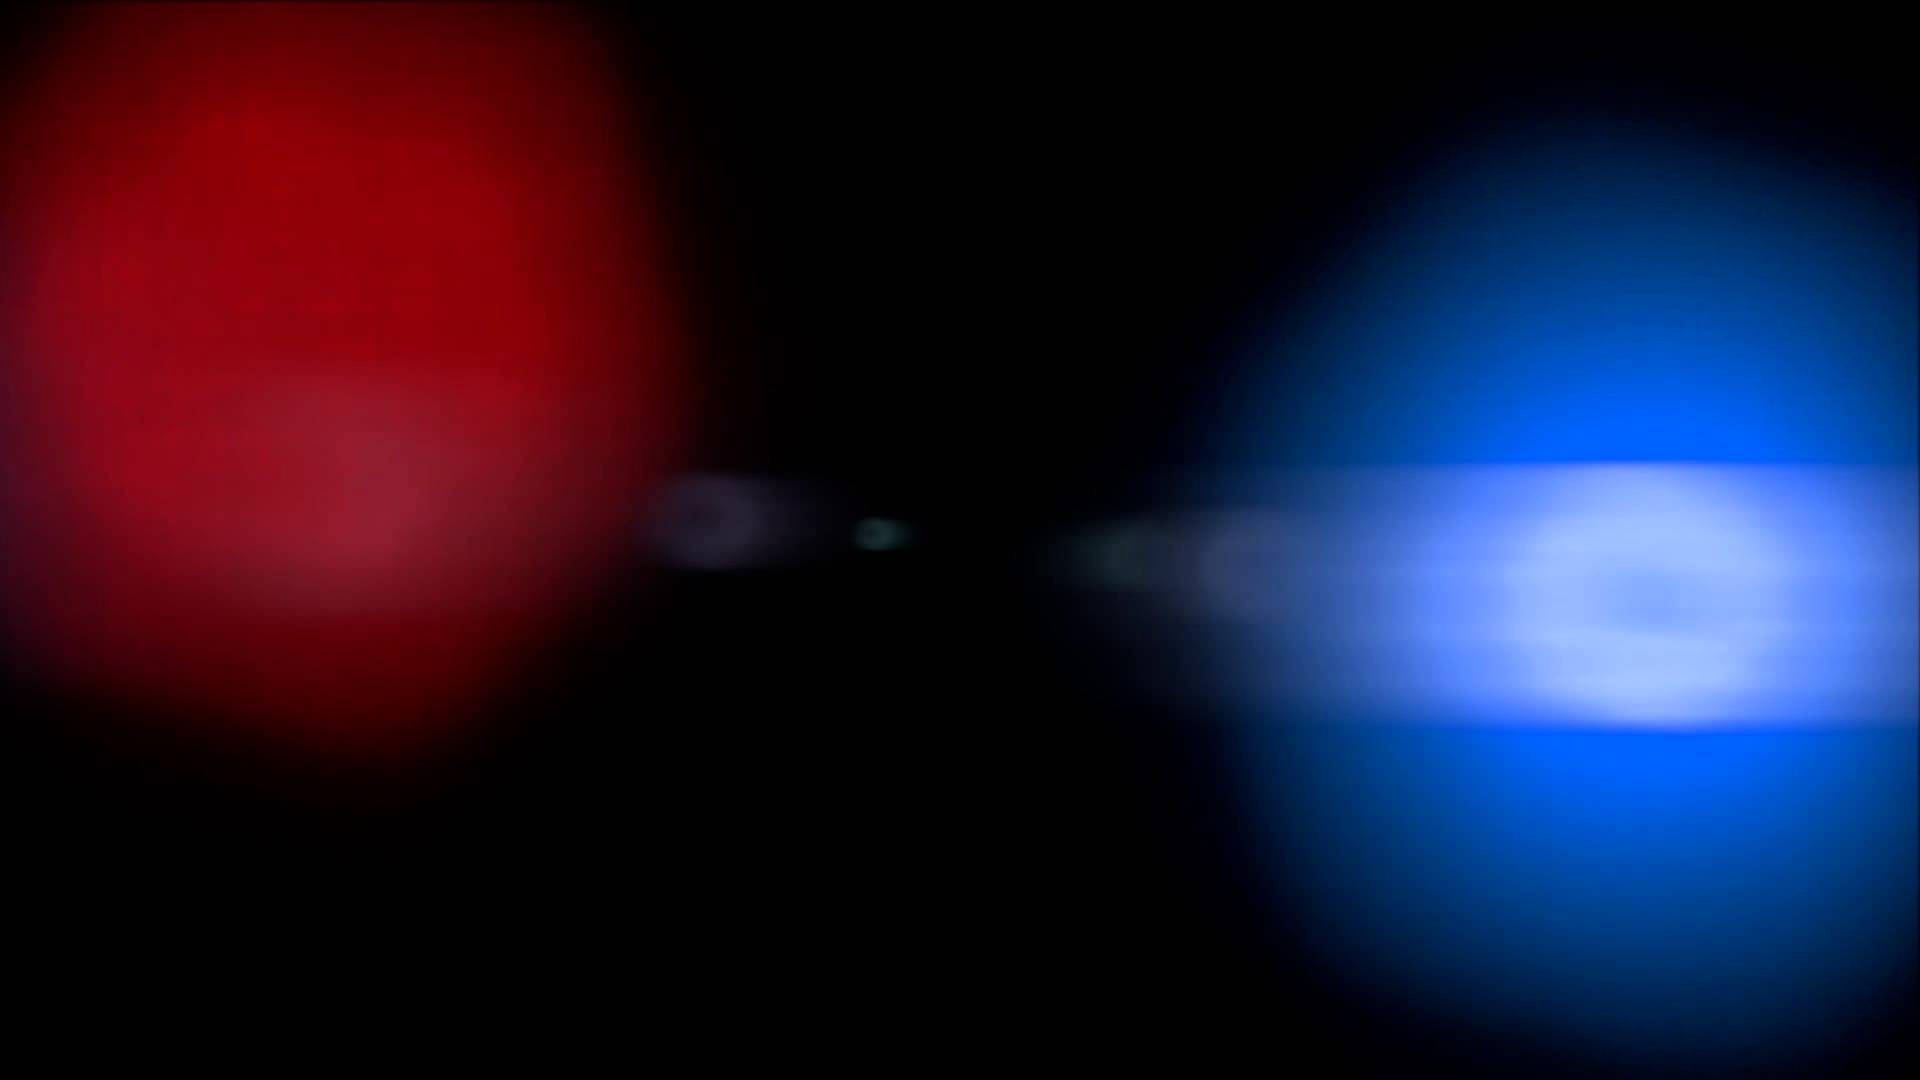 Flashing Police Lights Effect Overlay - Black Background - YouTube